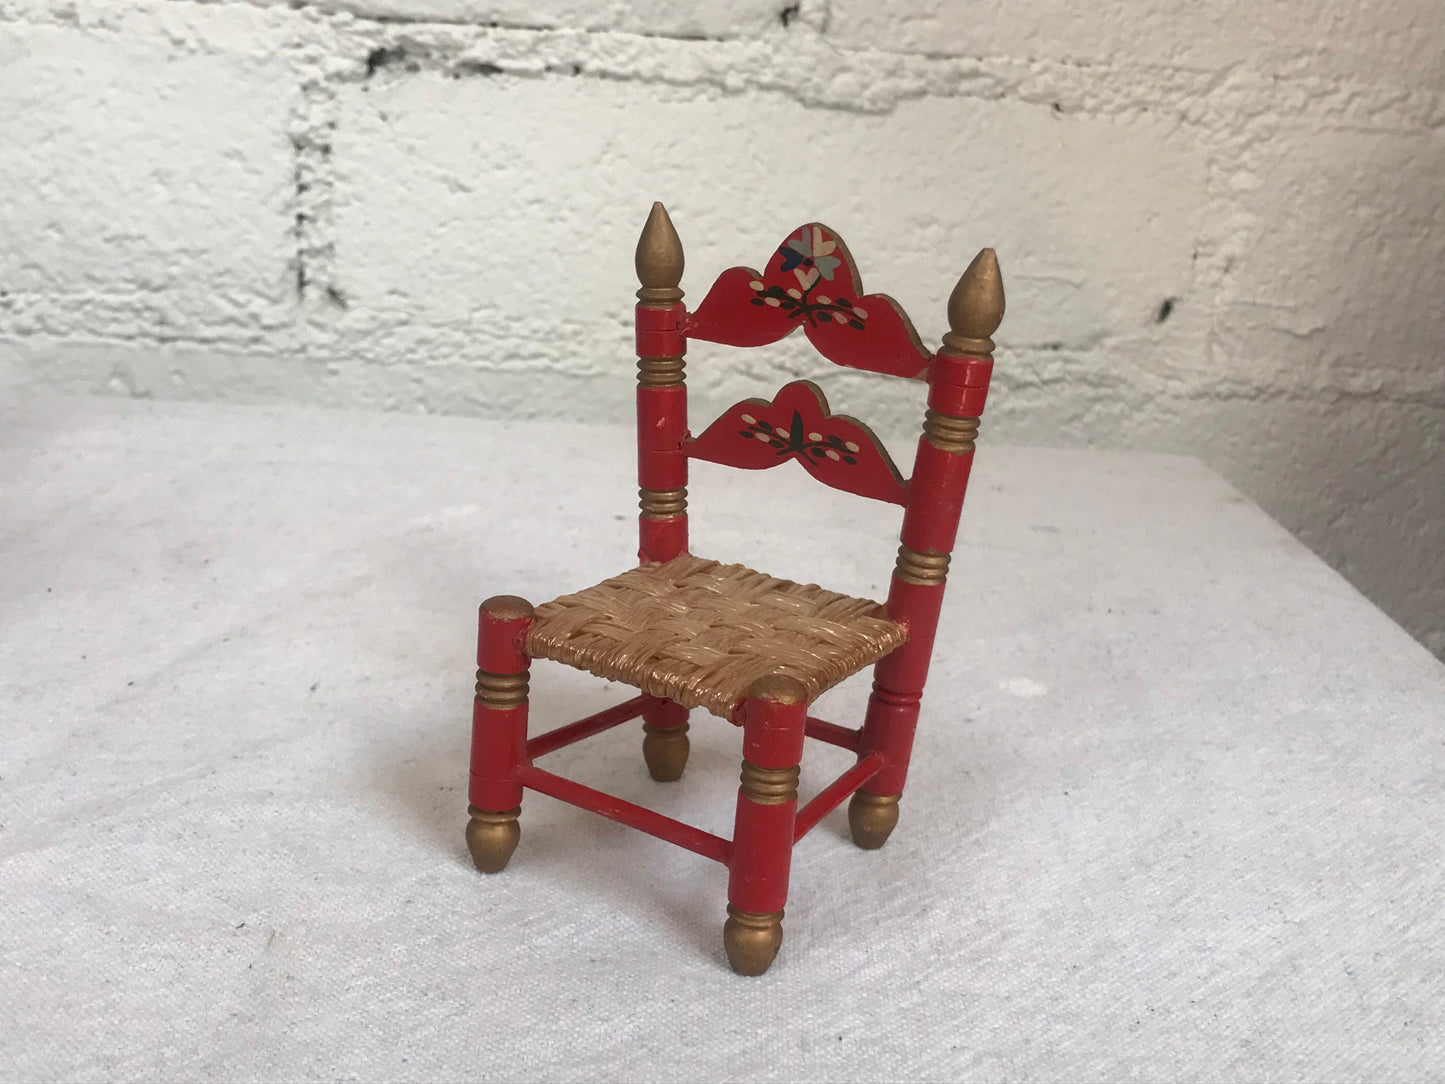 Vintage Hand-painted Dollhouse Folk Art Chair Set